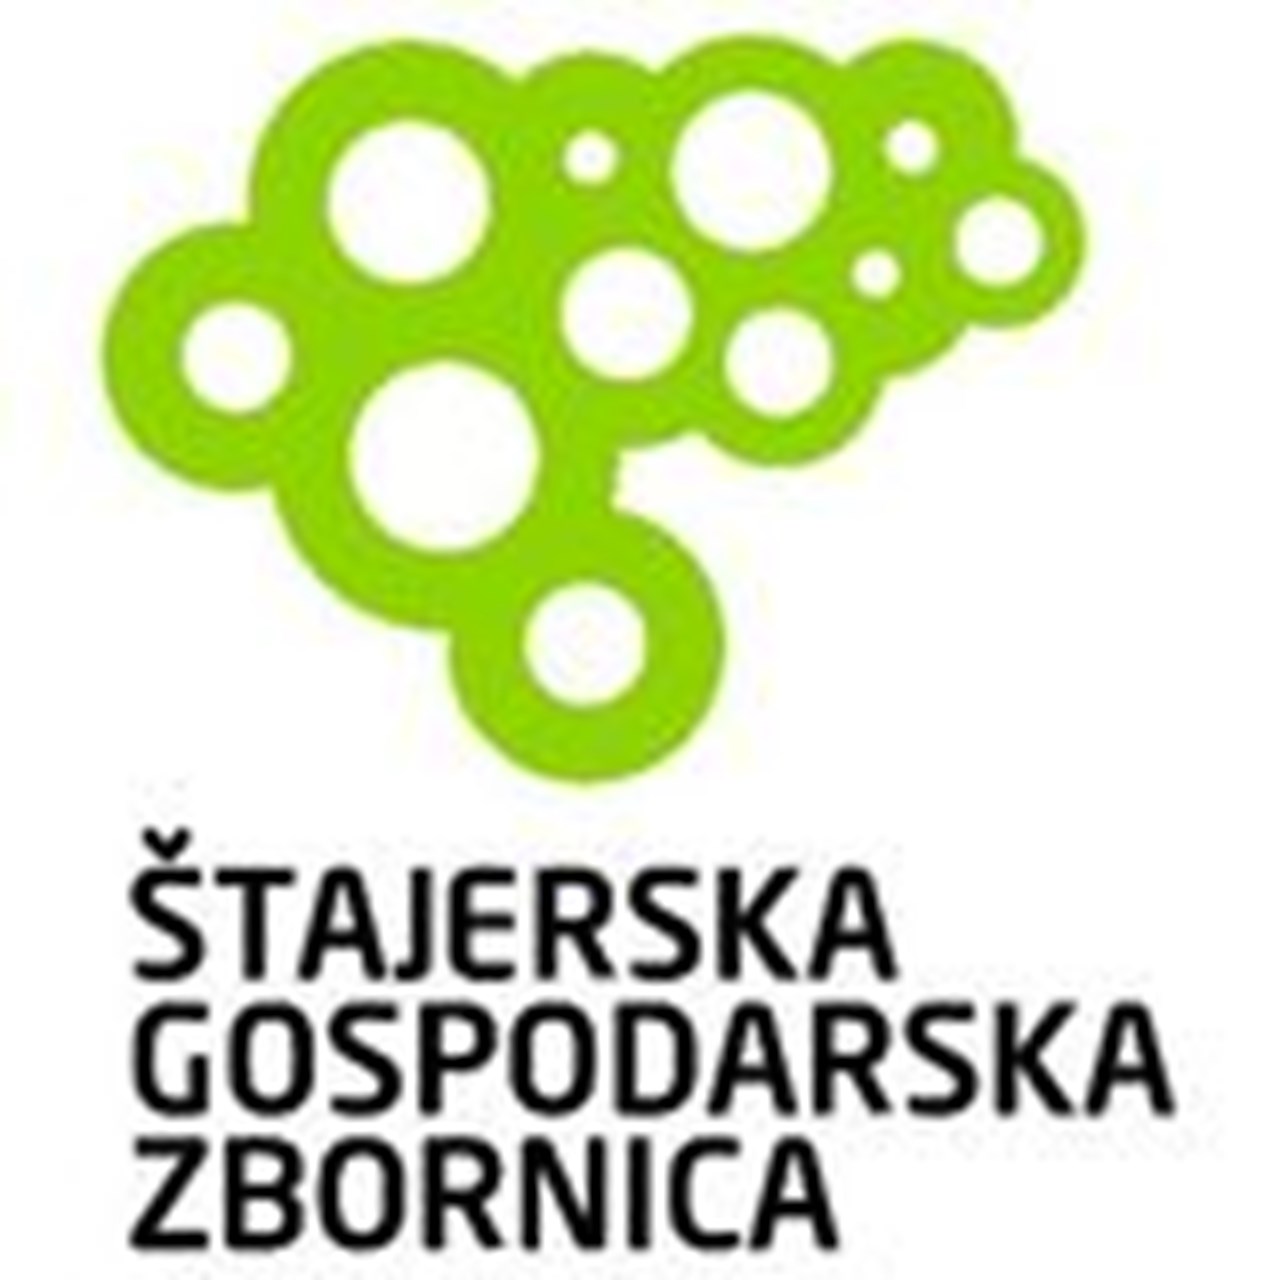 Chamber of Commerce and Industry of Štajerska ŠGZ